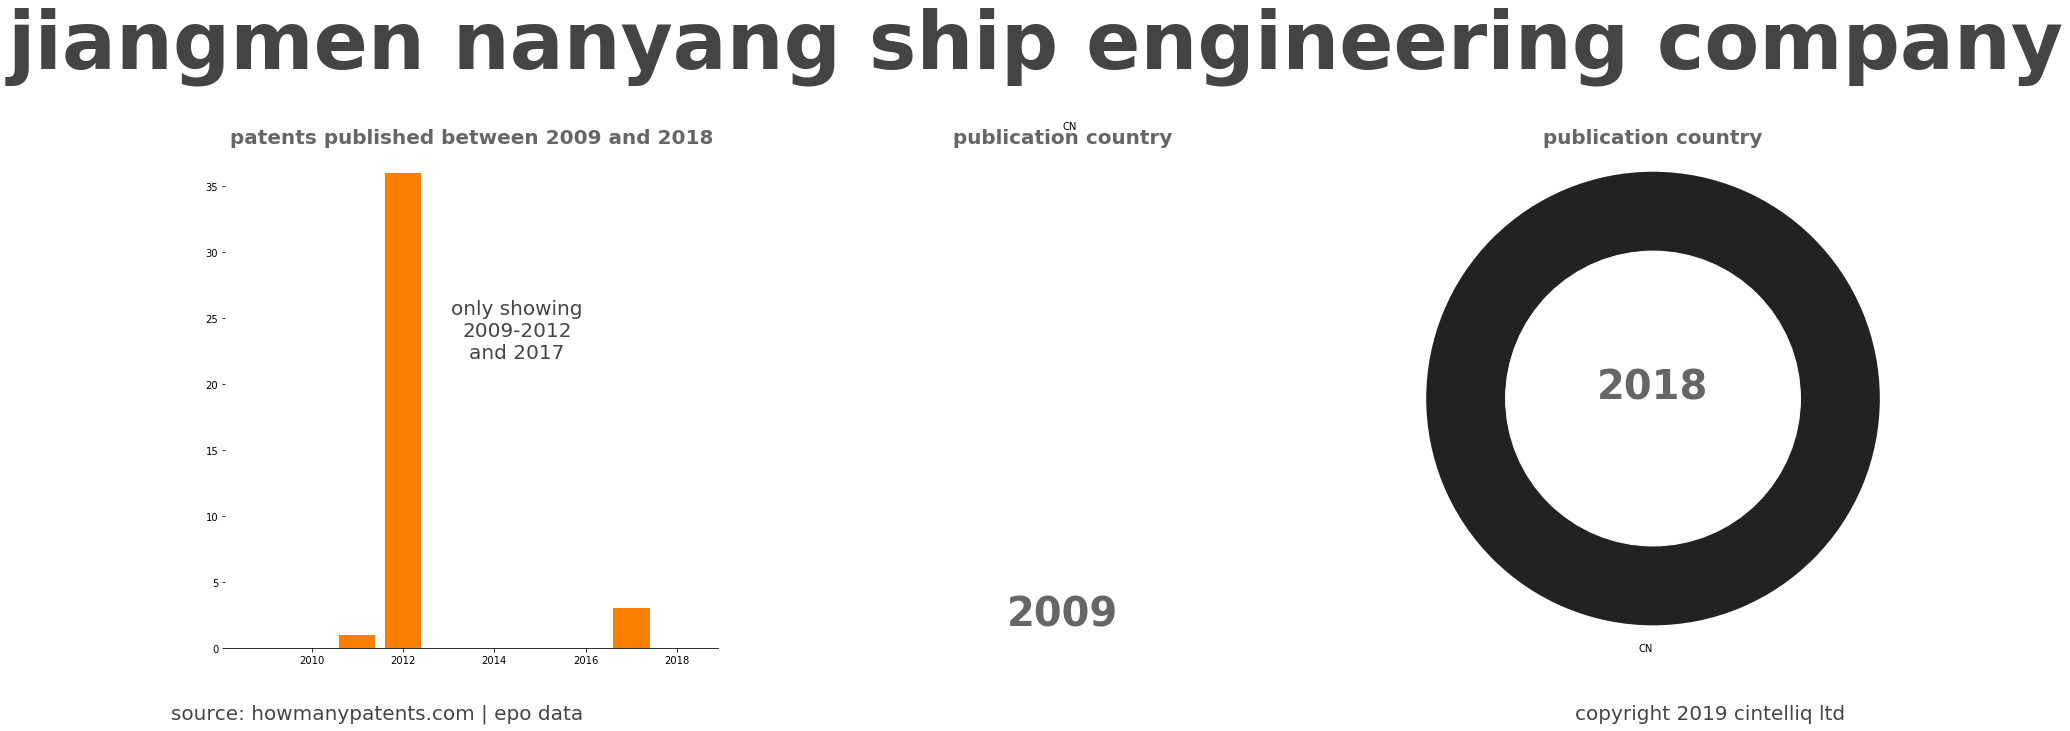 summary of patents for Jiangmen Nanyang Ship Engineering Company